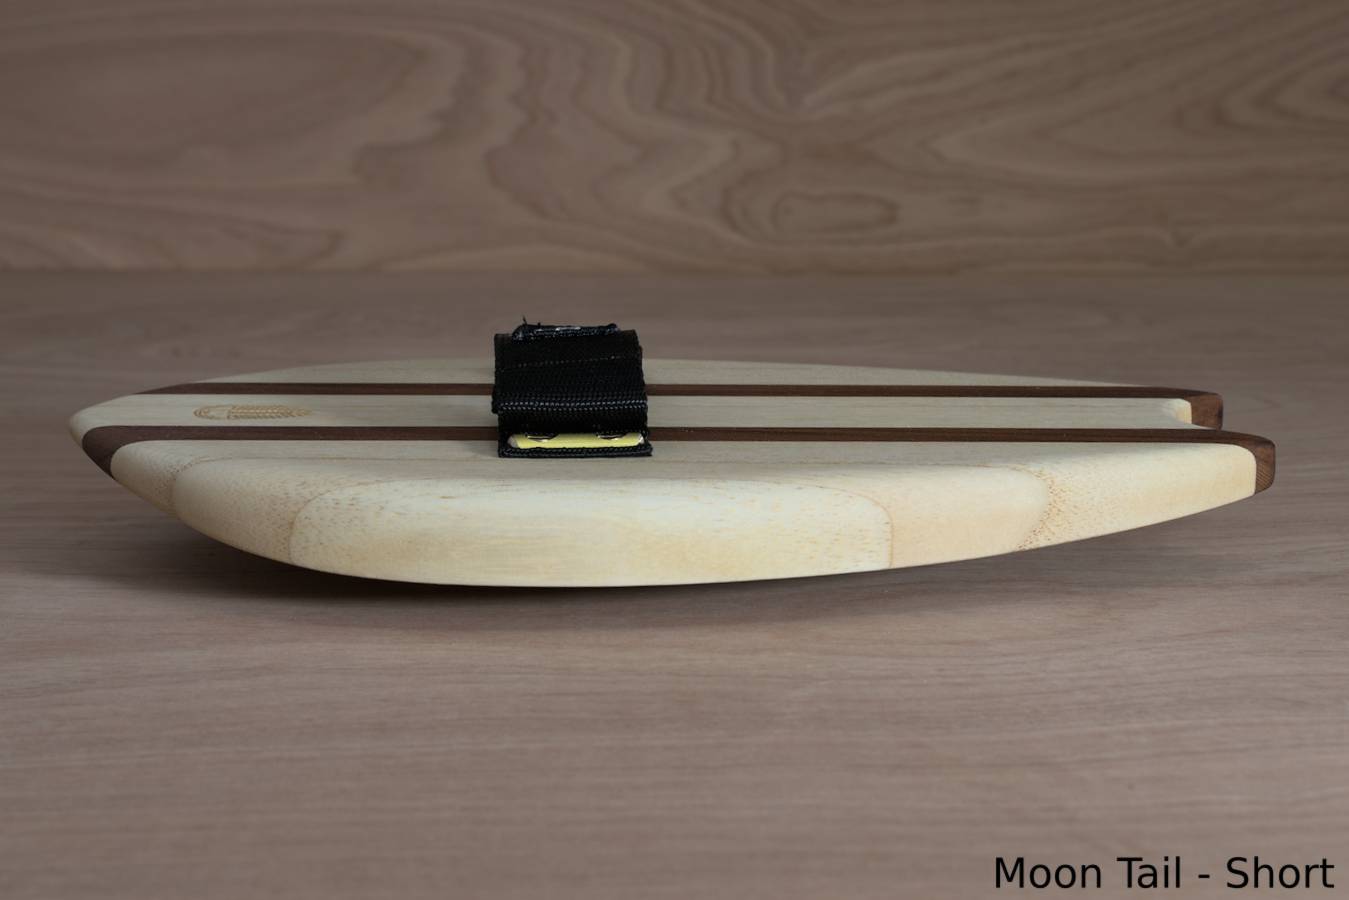 Moon Tail (short) wooden handplane handmade by Fyne Boat Kits